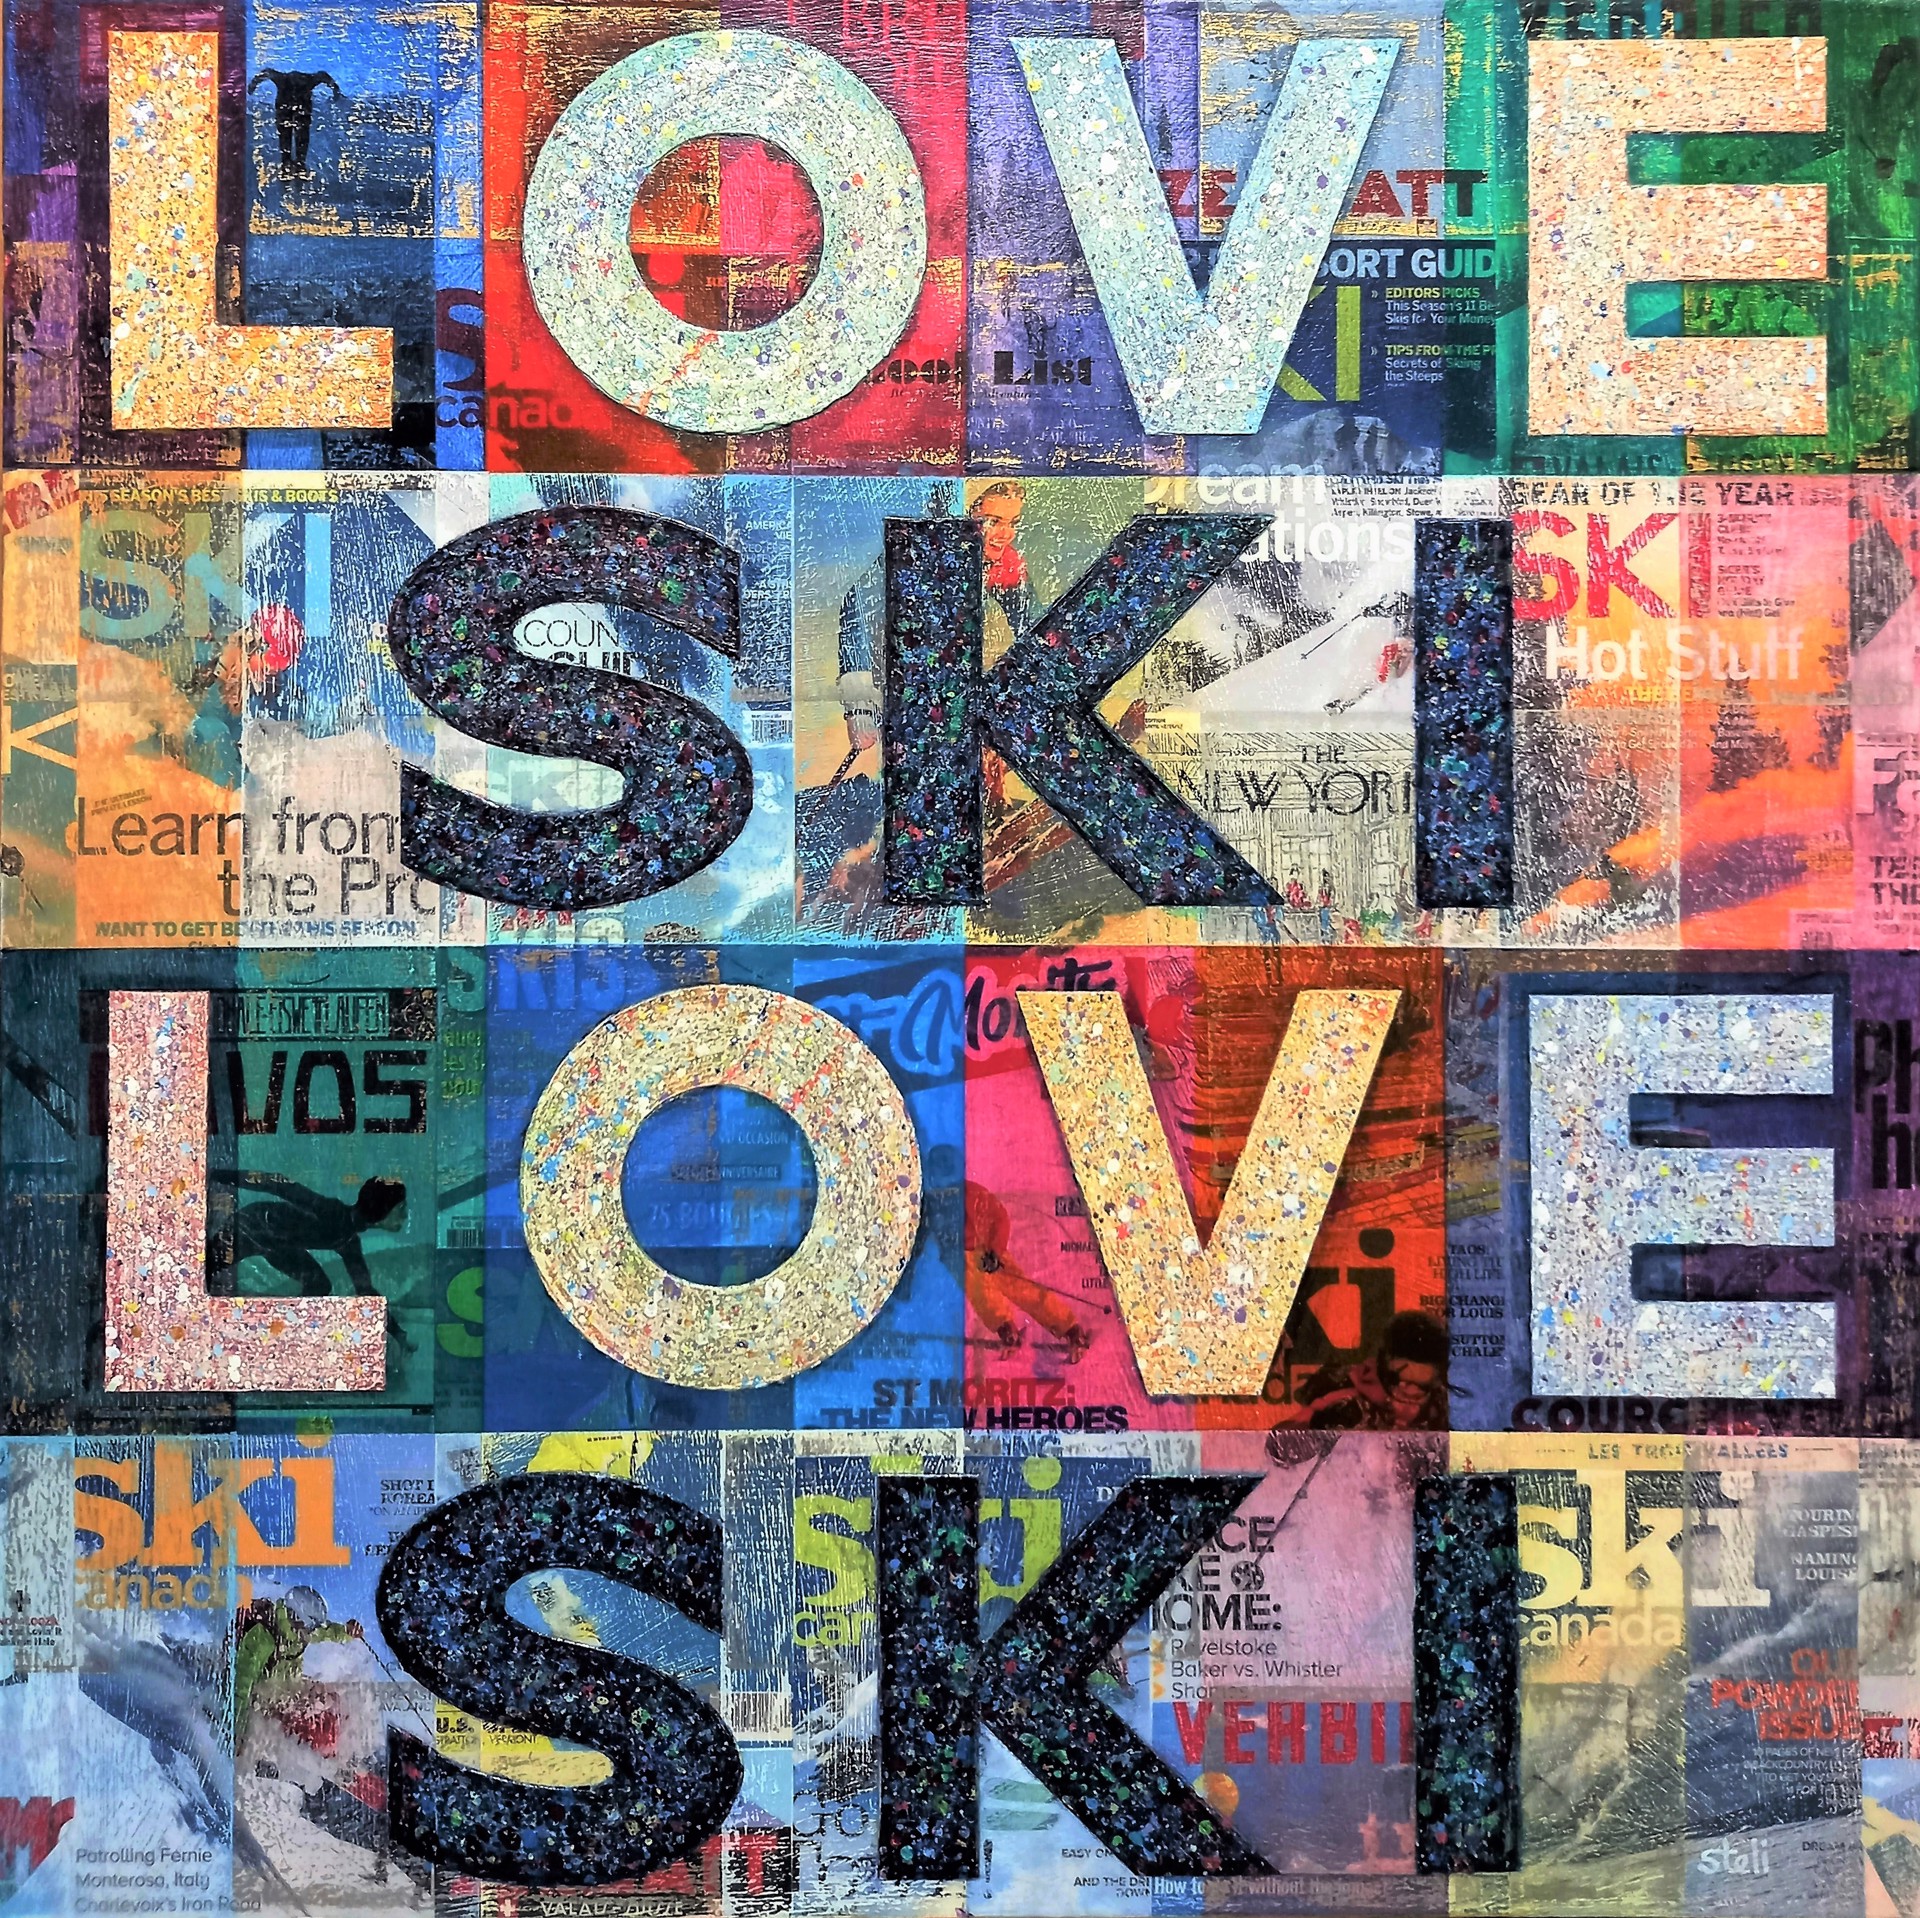 When you Love Ski 2 by Steli Christoff